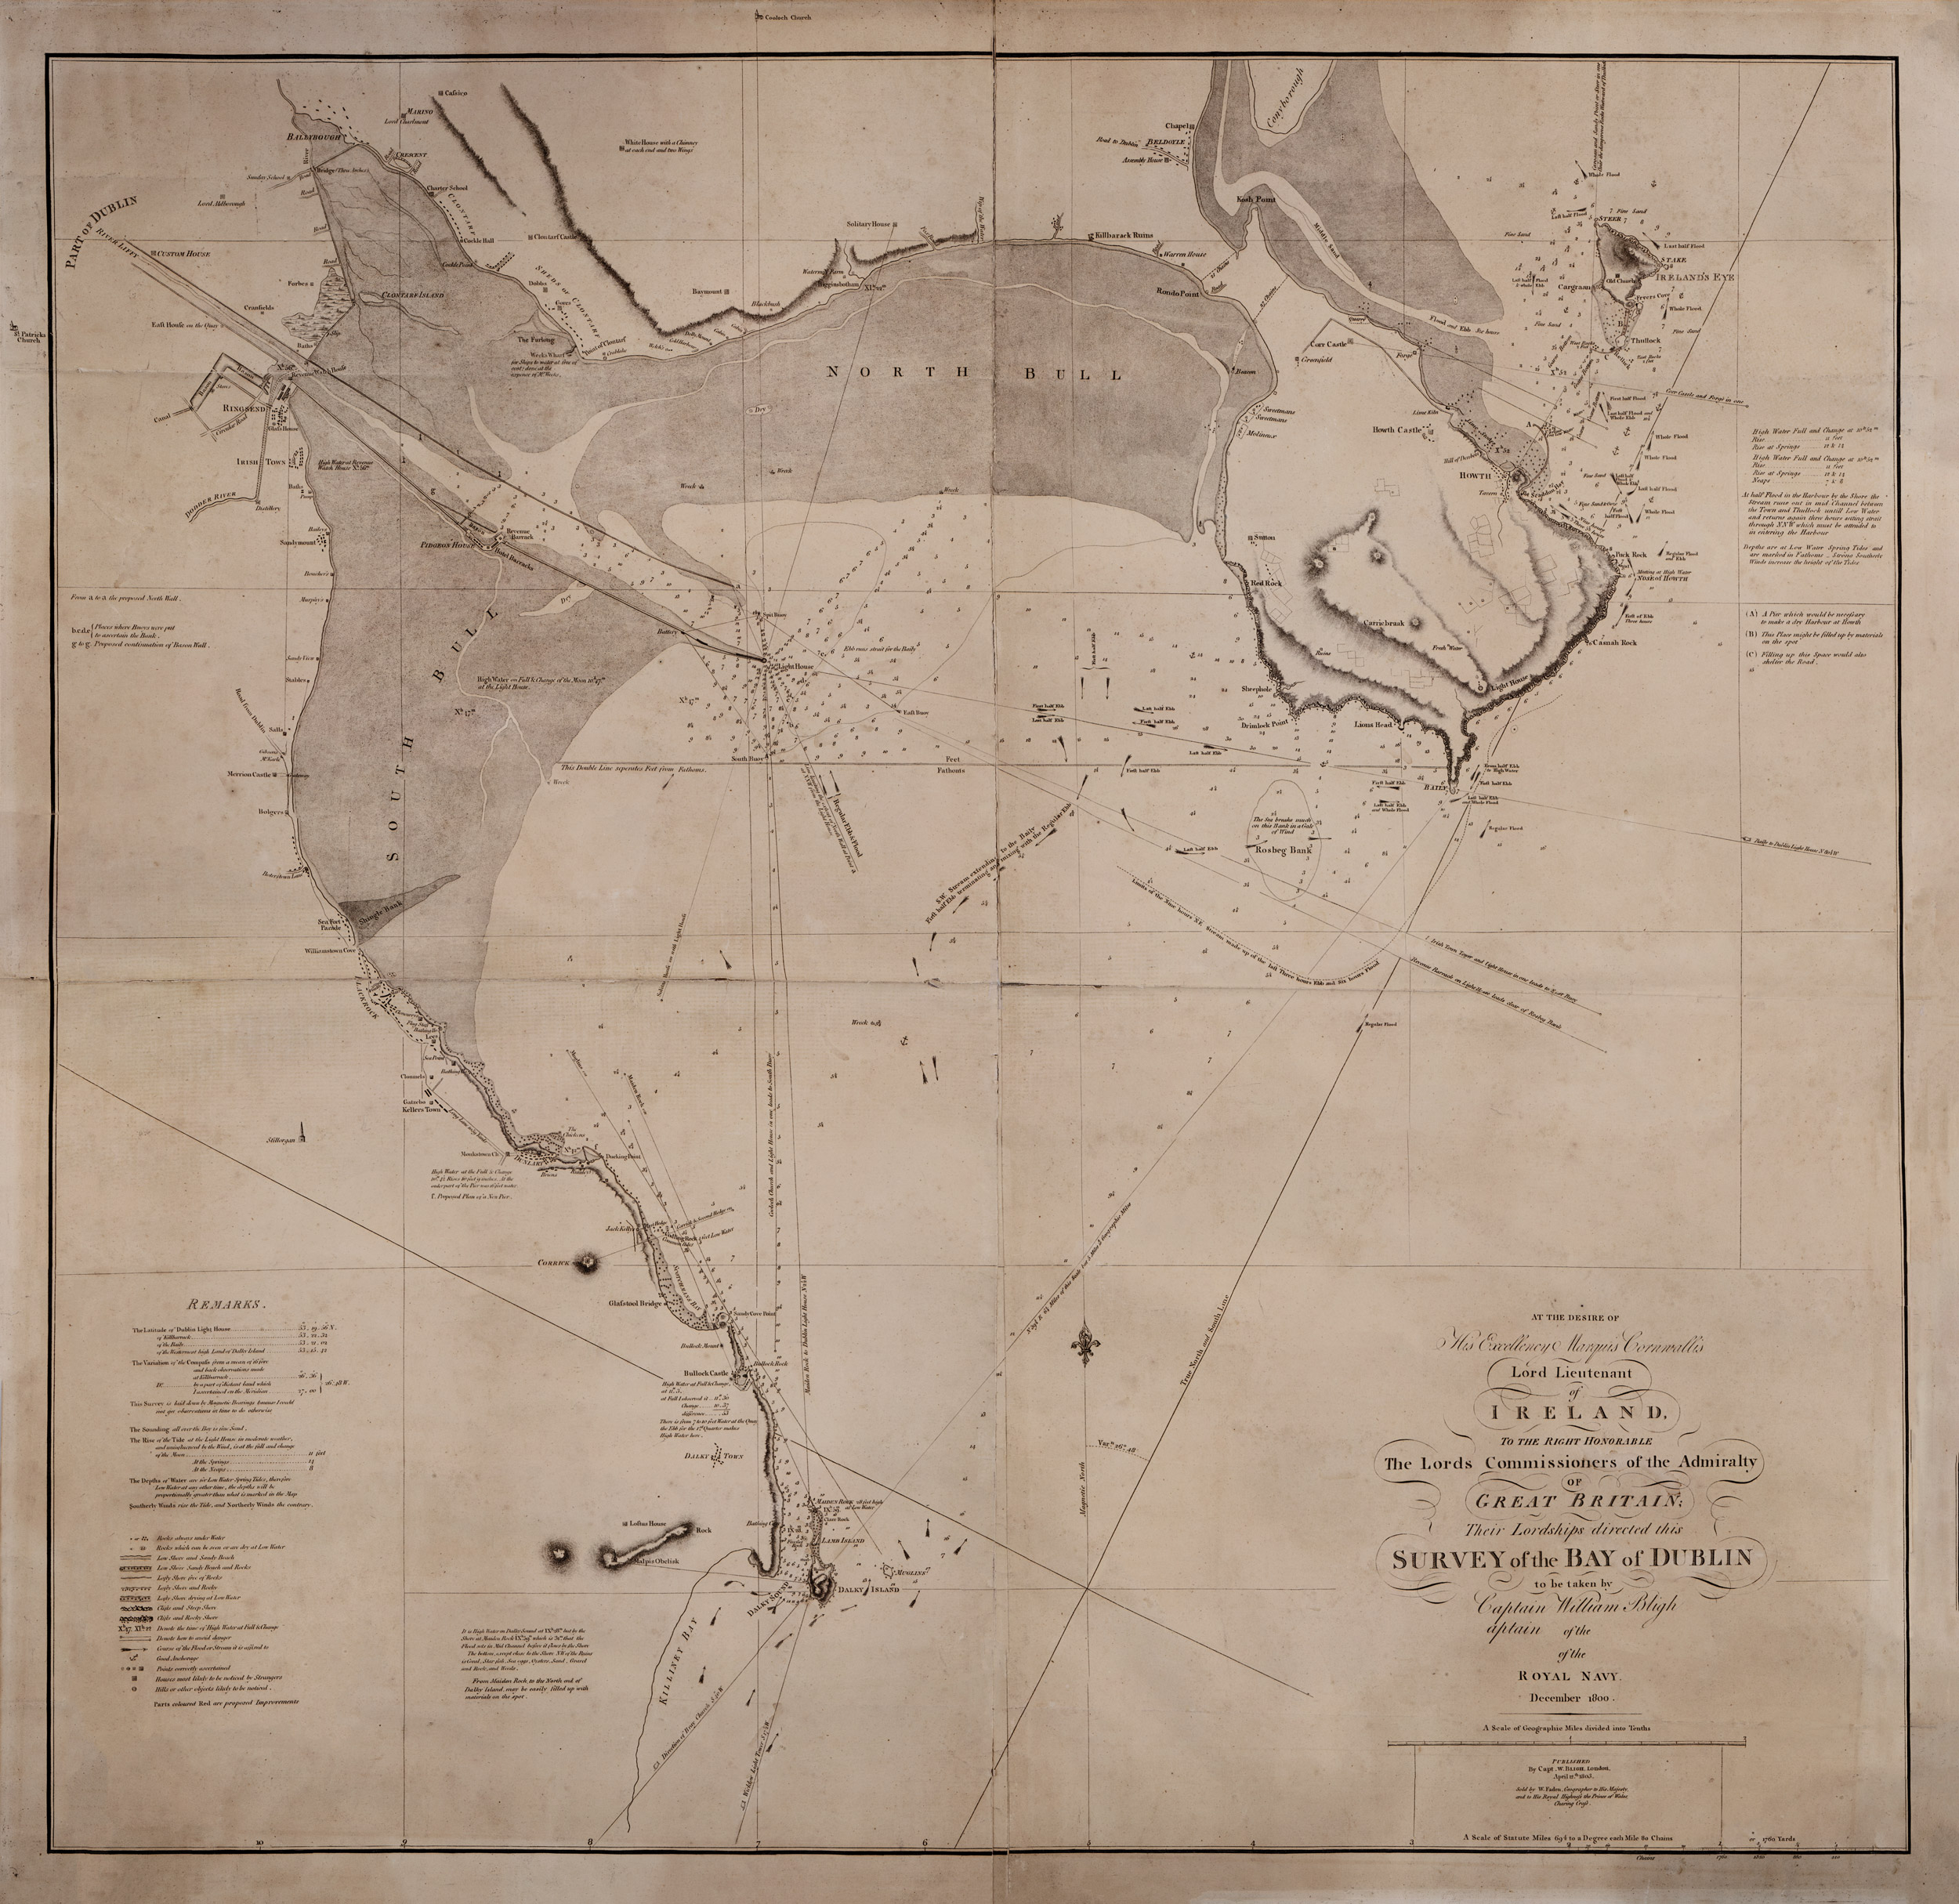 Captain William Bligh's survey map of Dublin 1800